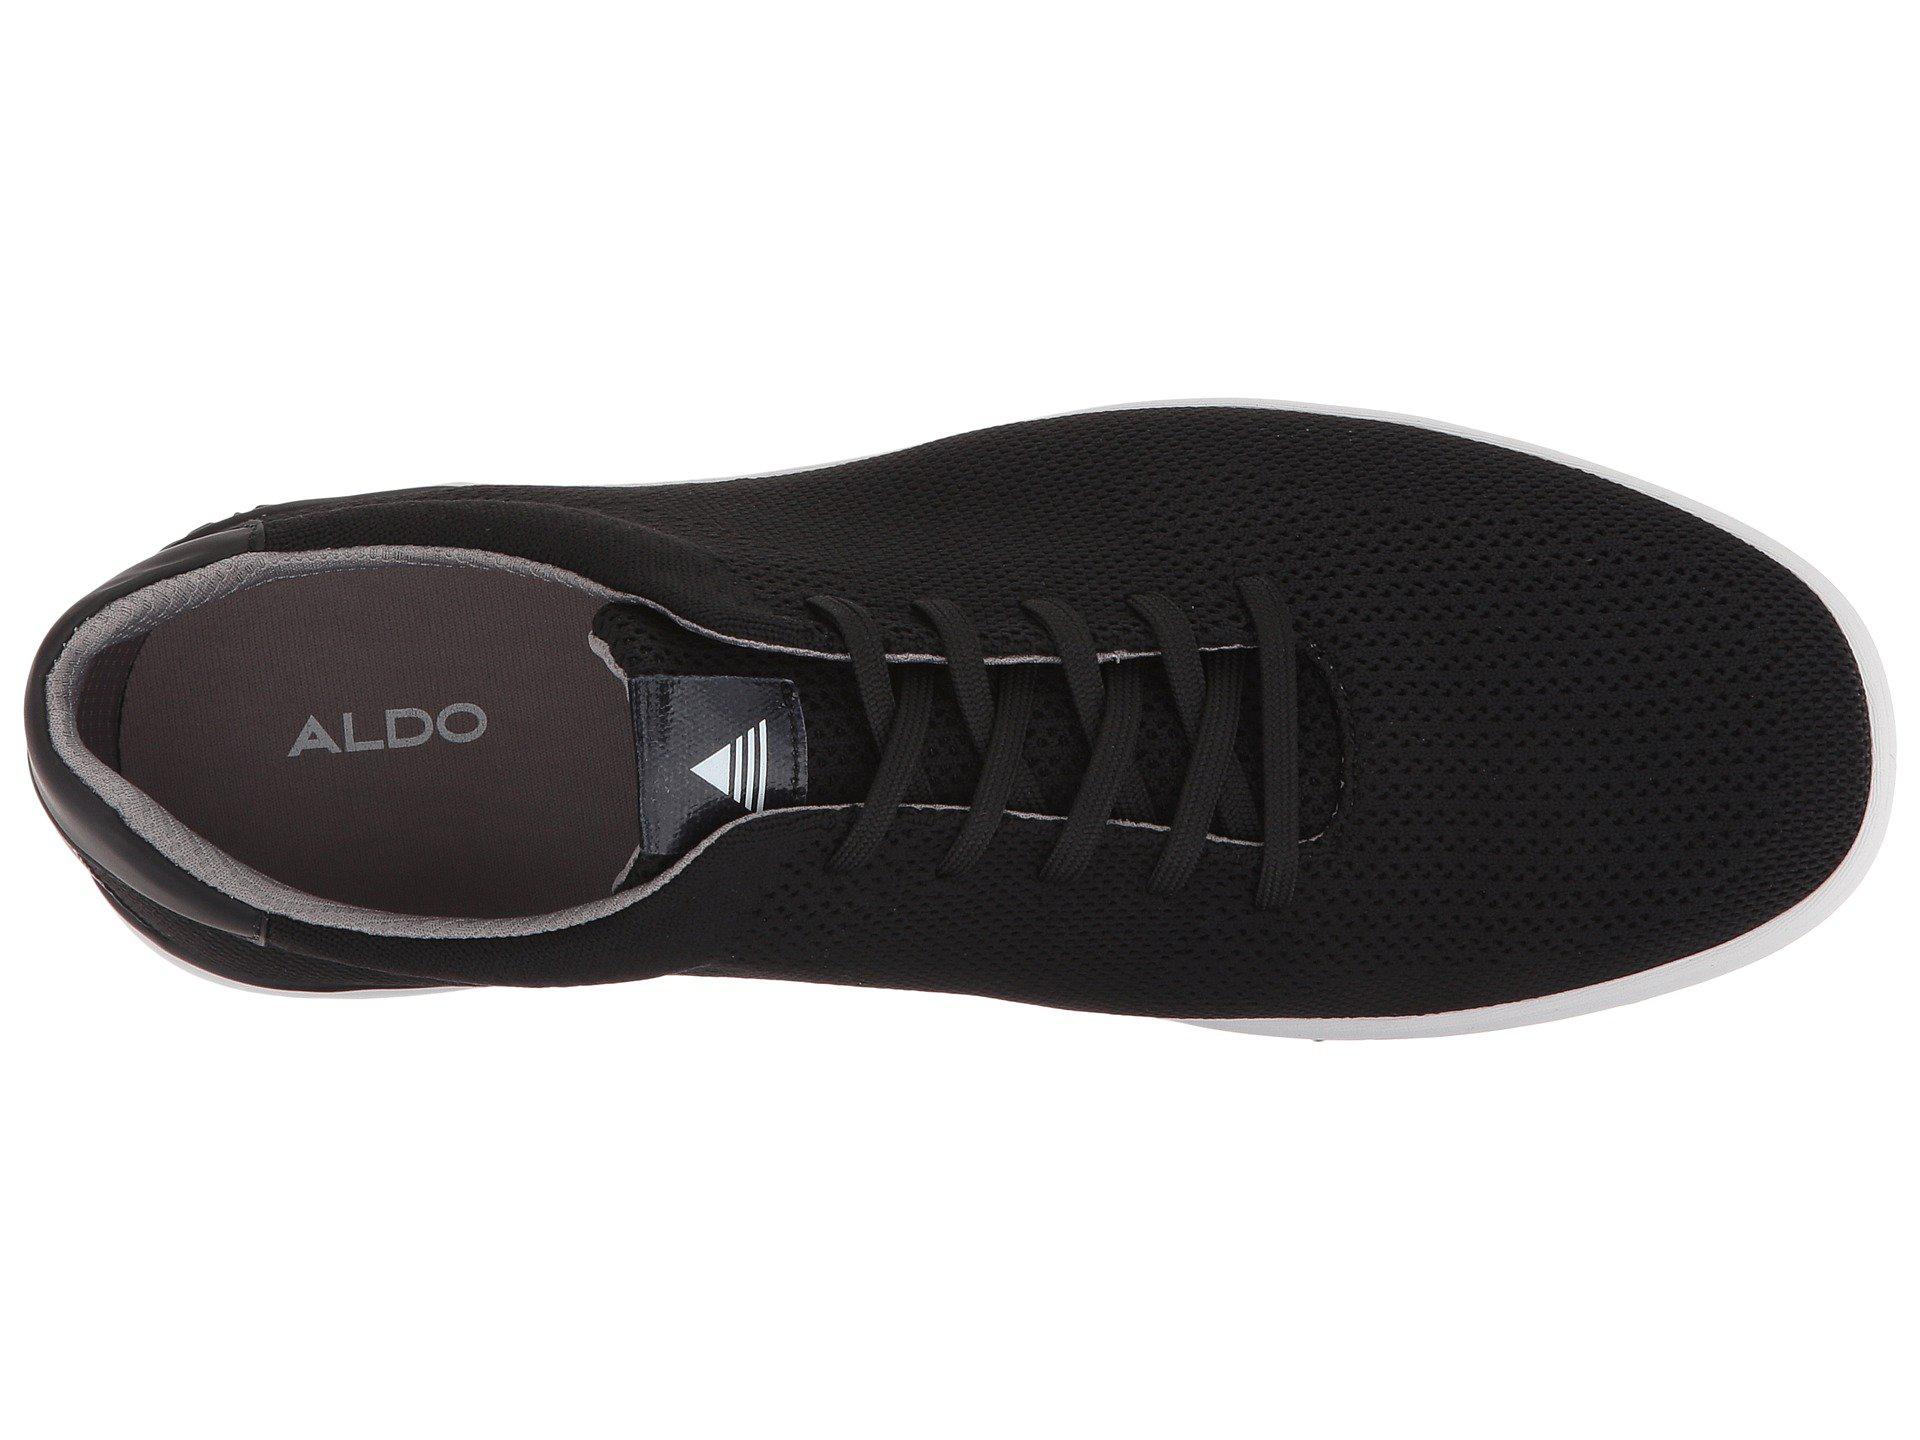 Drejning Forskellige Lys ALDO Cotton Heary in Black Leather (Black) for Men - Lyst